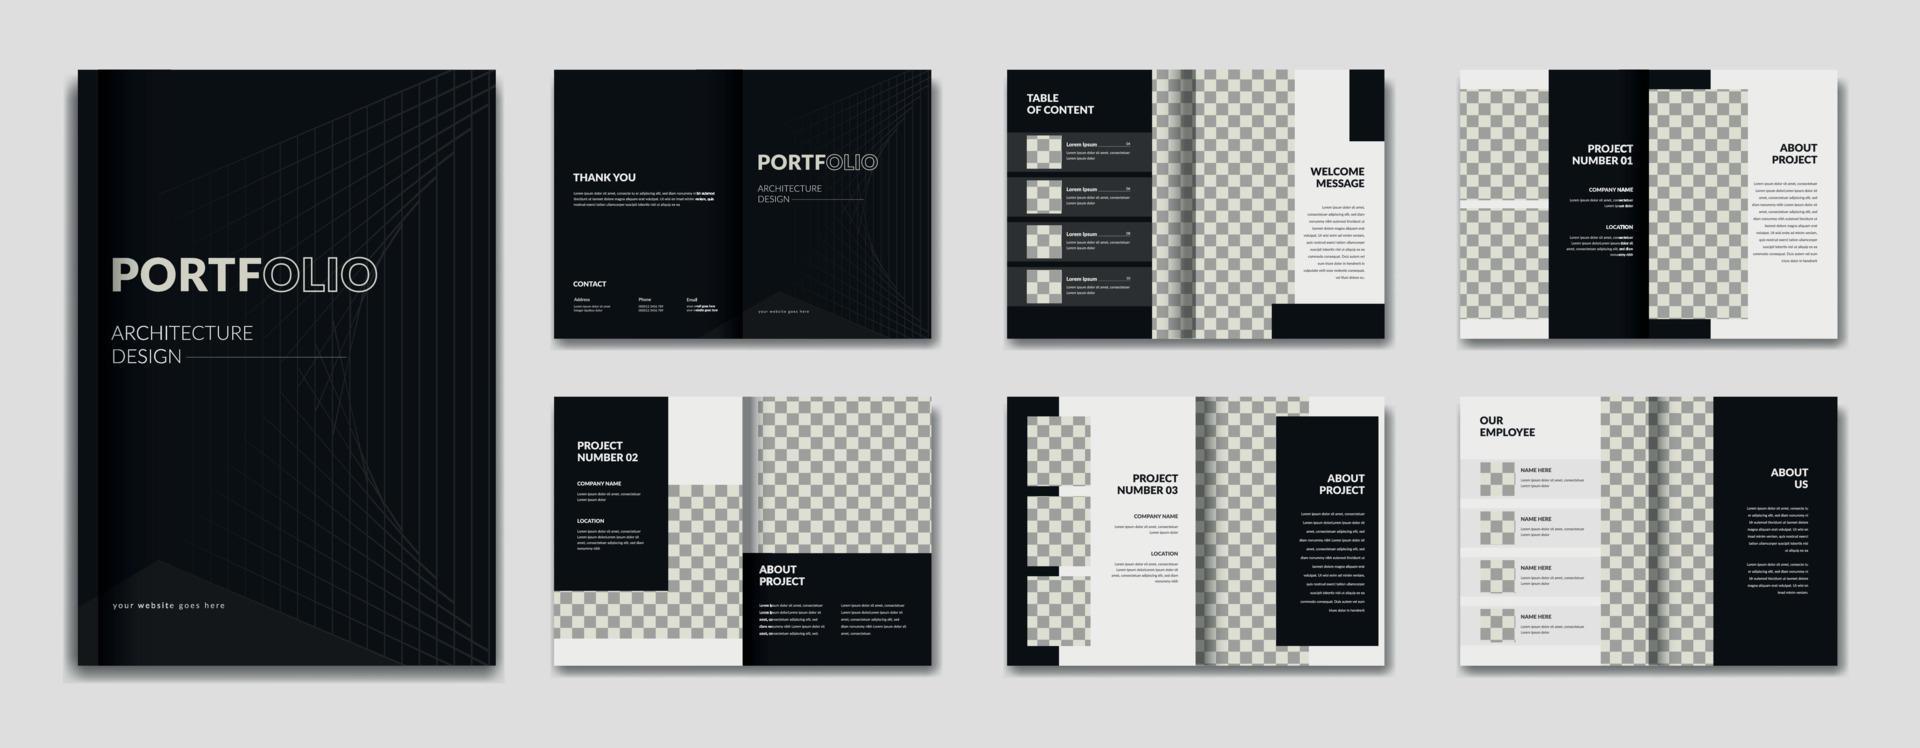 Architecture black and white portfolio design template, architecture and interior professional portfolio layout, print ready template, a4 standard size brochure for architecture portfolio vector